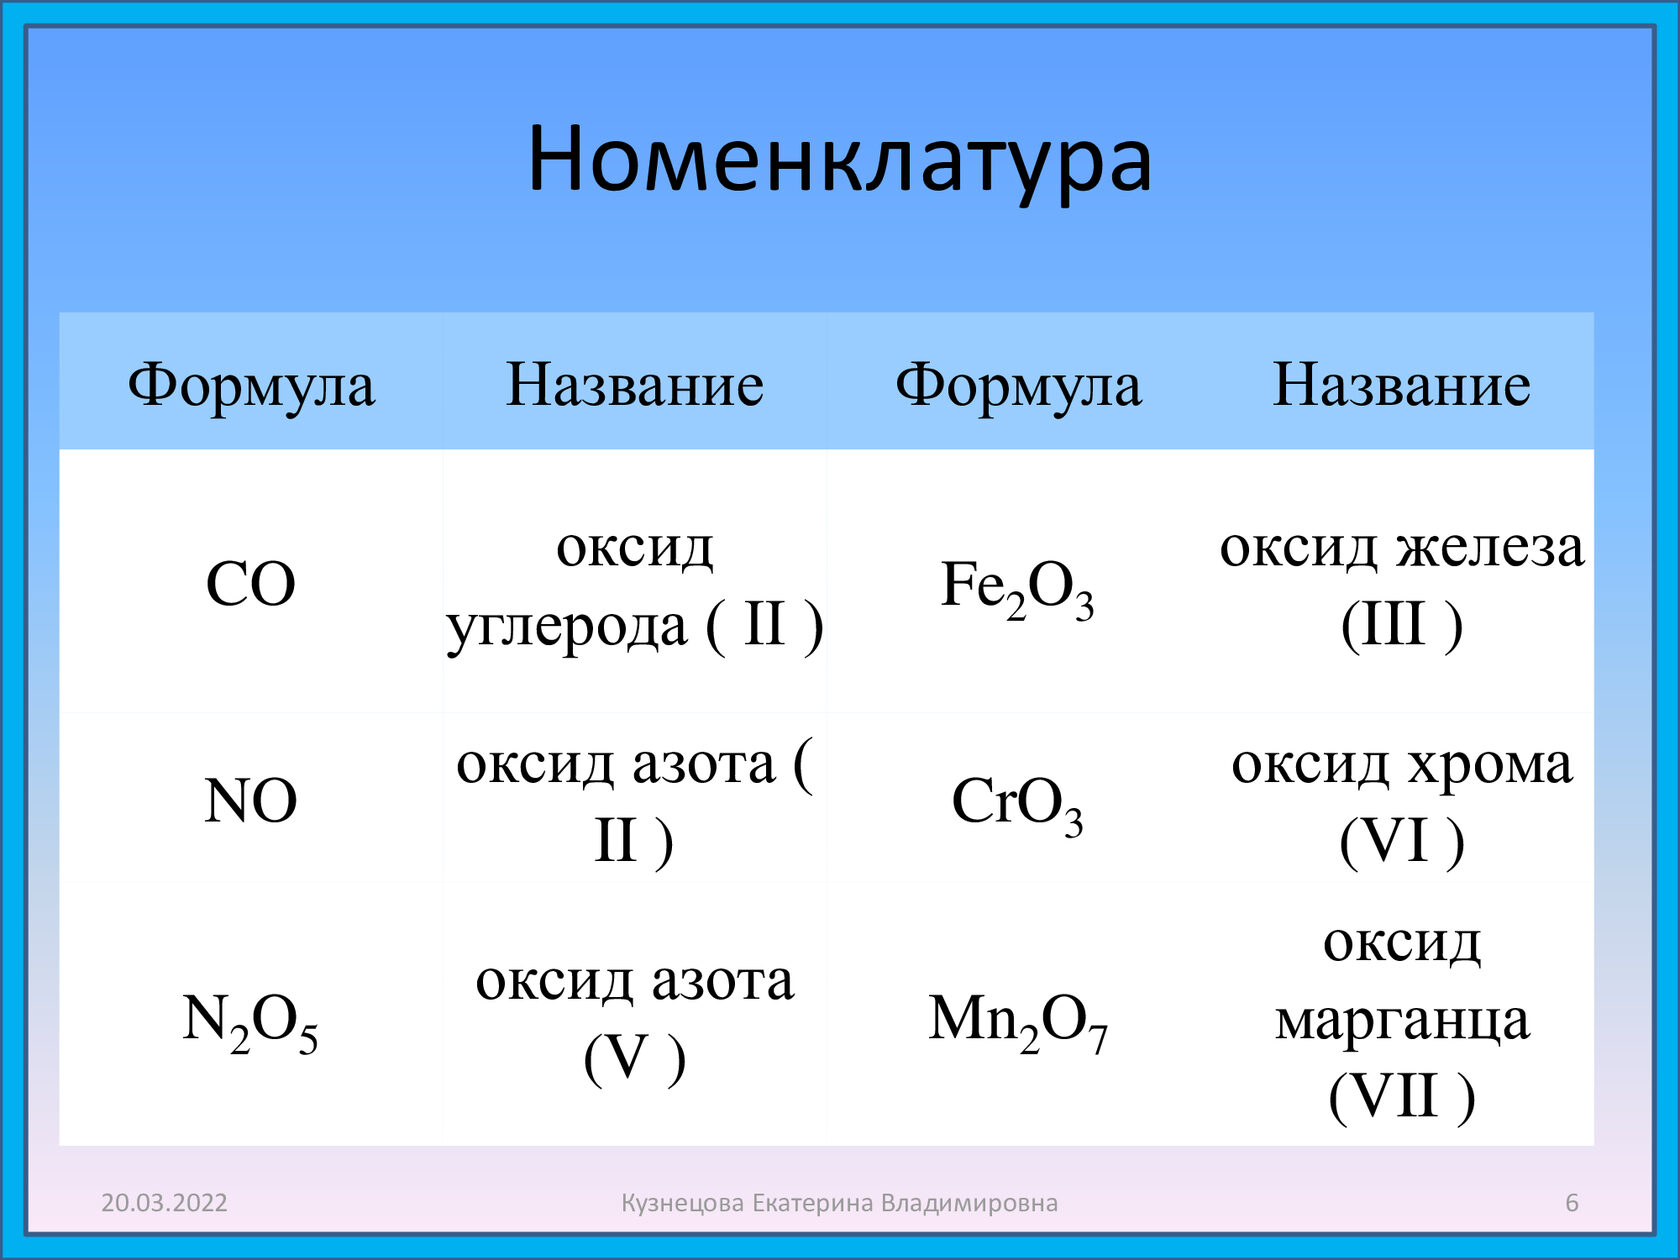 Fe no3 2 класс неорганических соединений. Классификация неорганических соединений оксиды. Номенклатура оксидов. Оксид азота класс неорганических соединений. Классификация и номенклатура оксидов.